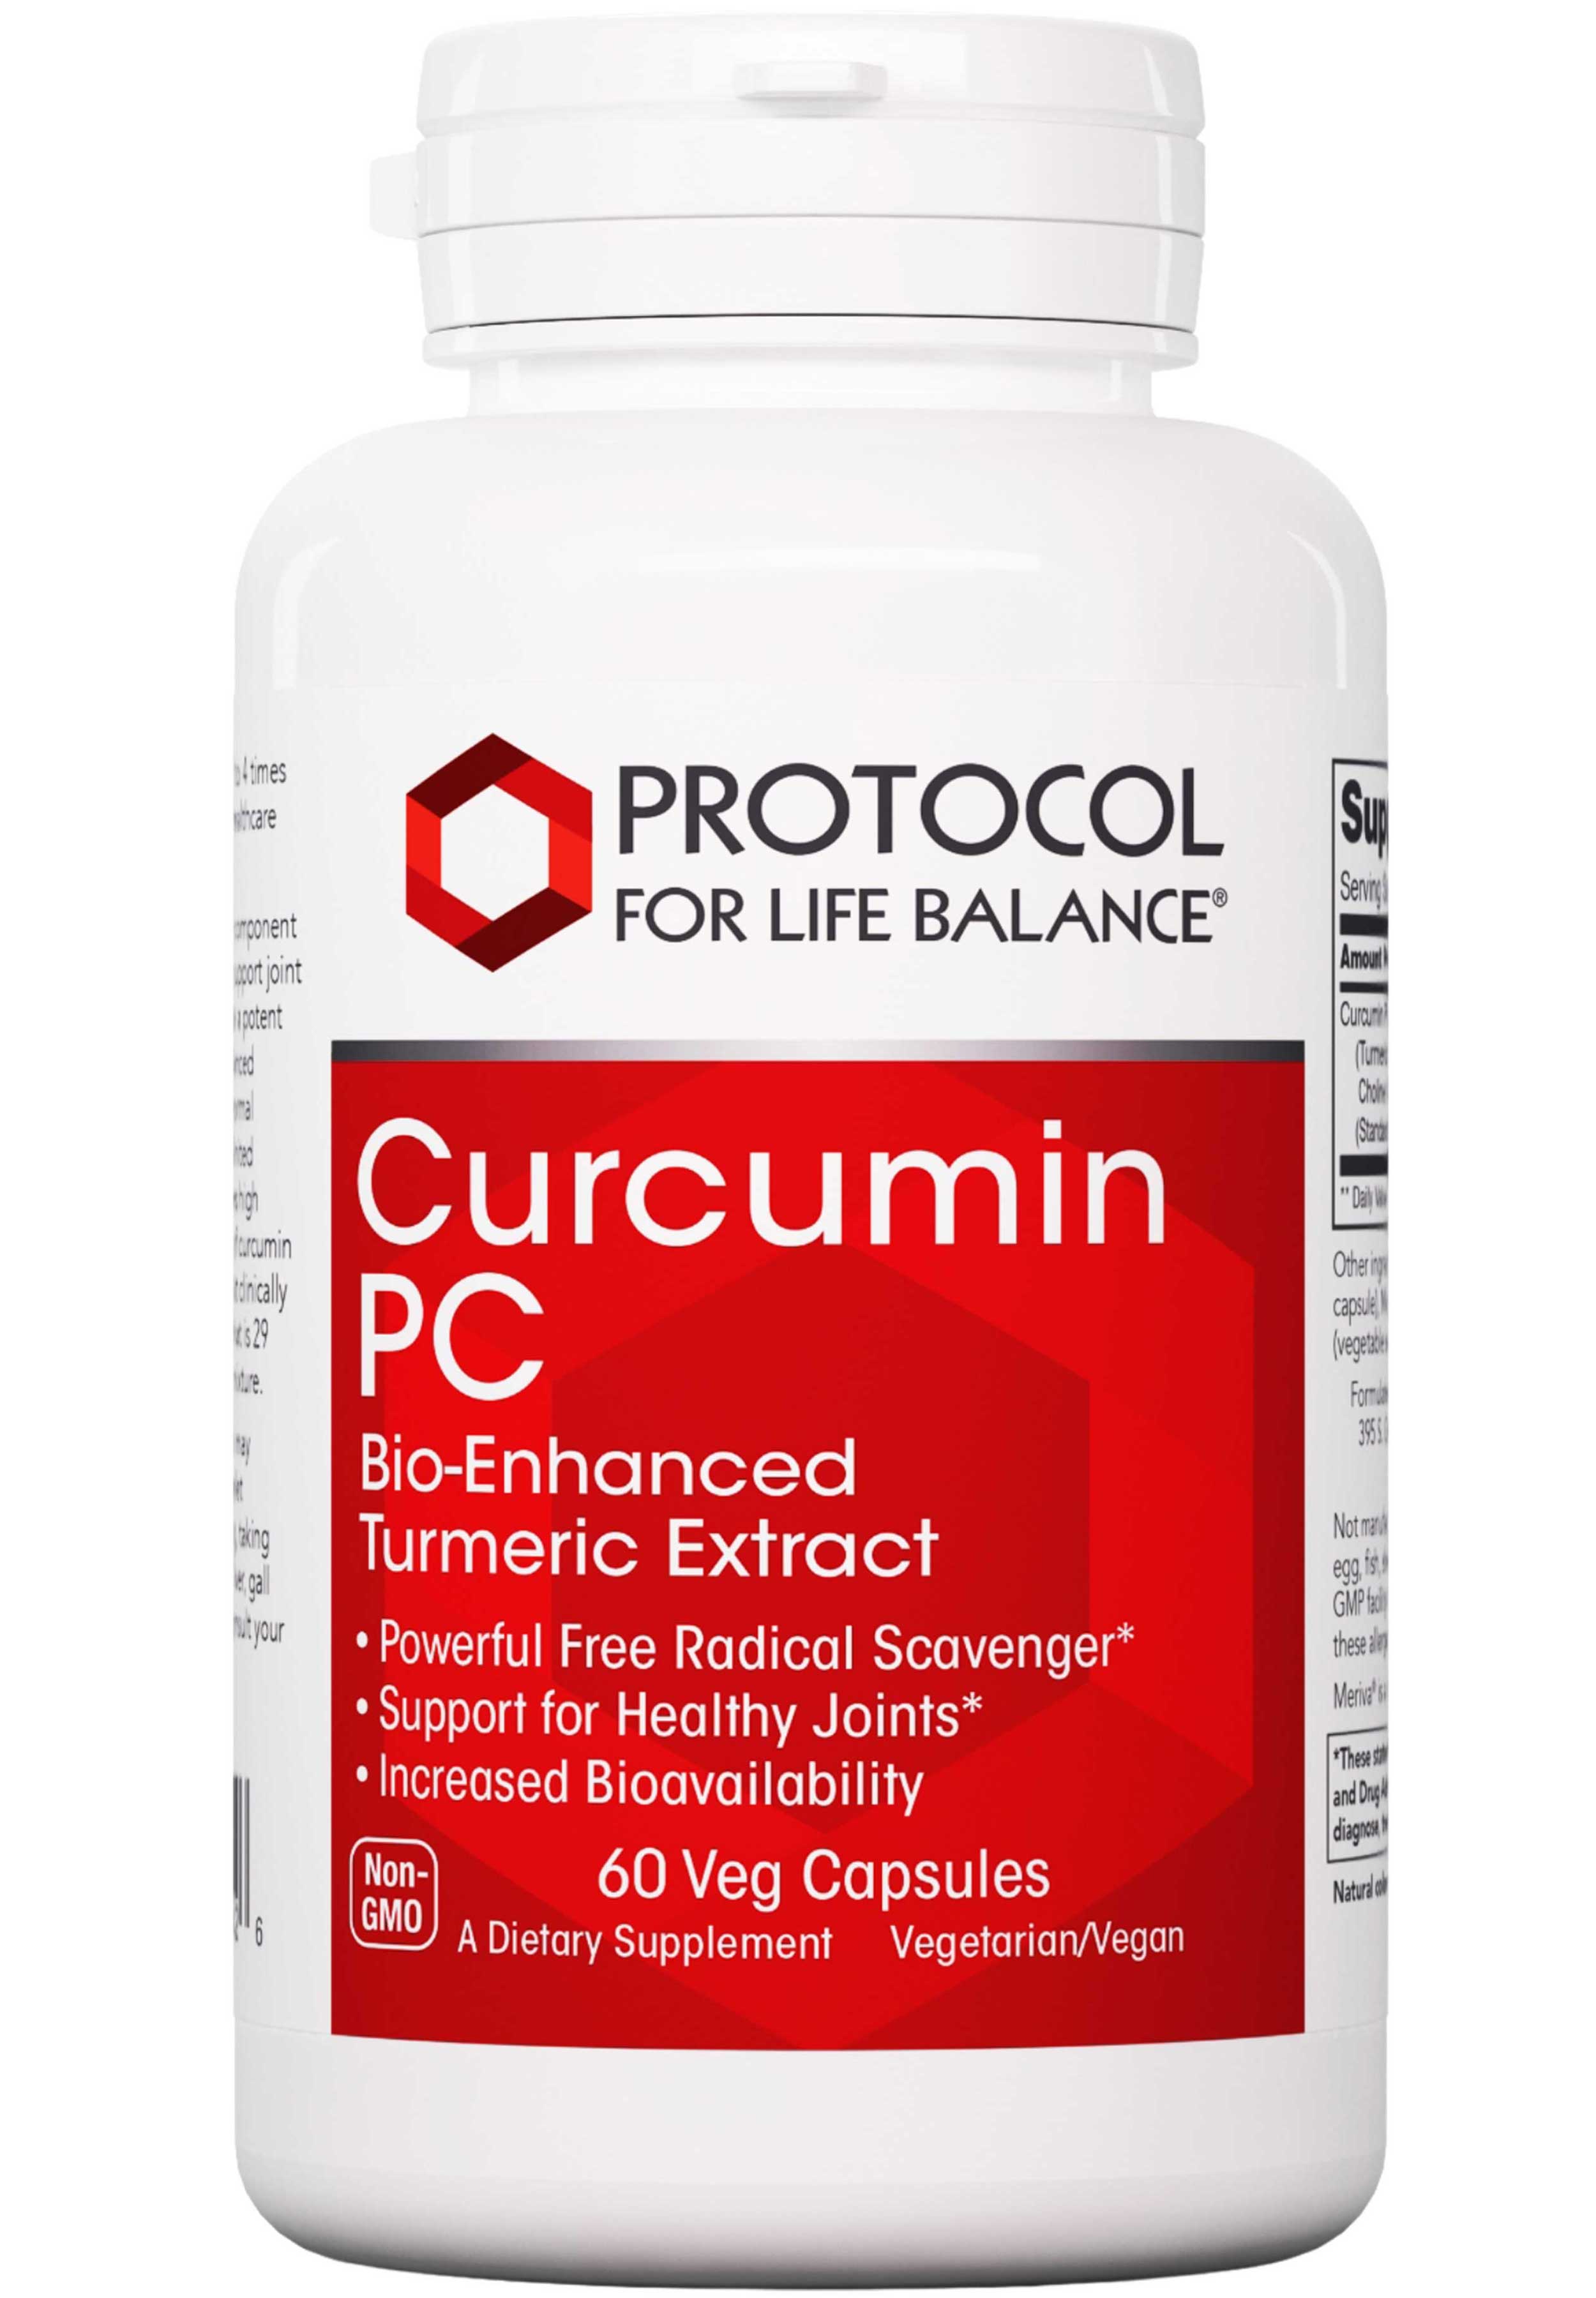 Protocol for Life Balance Curcumin PC